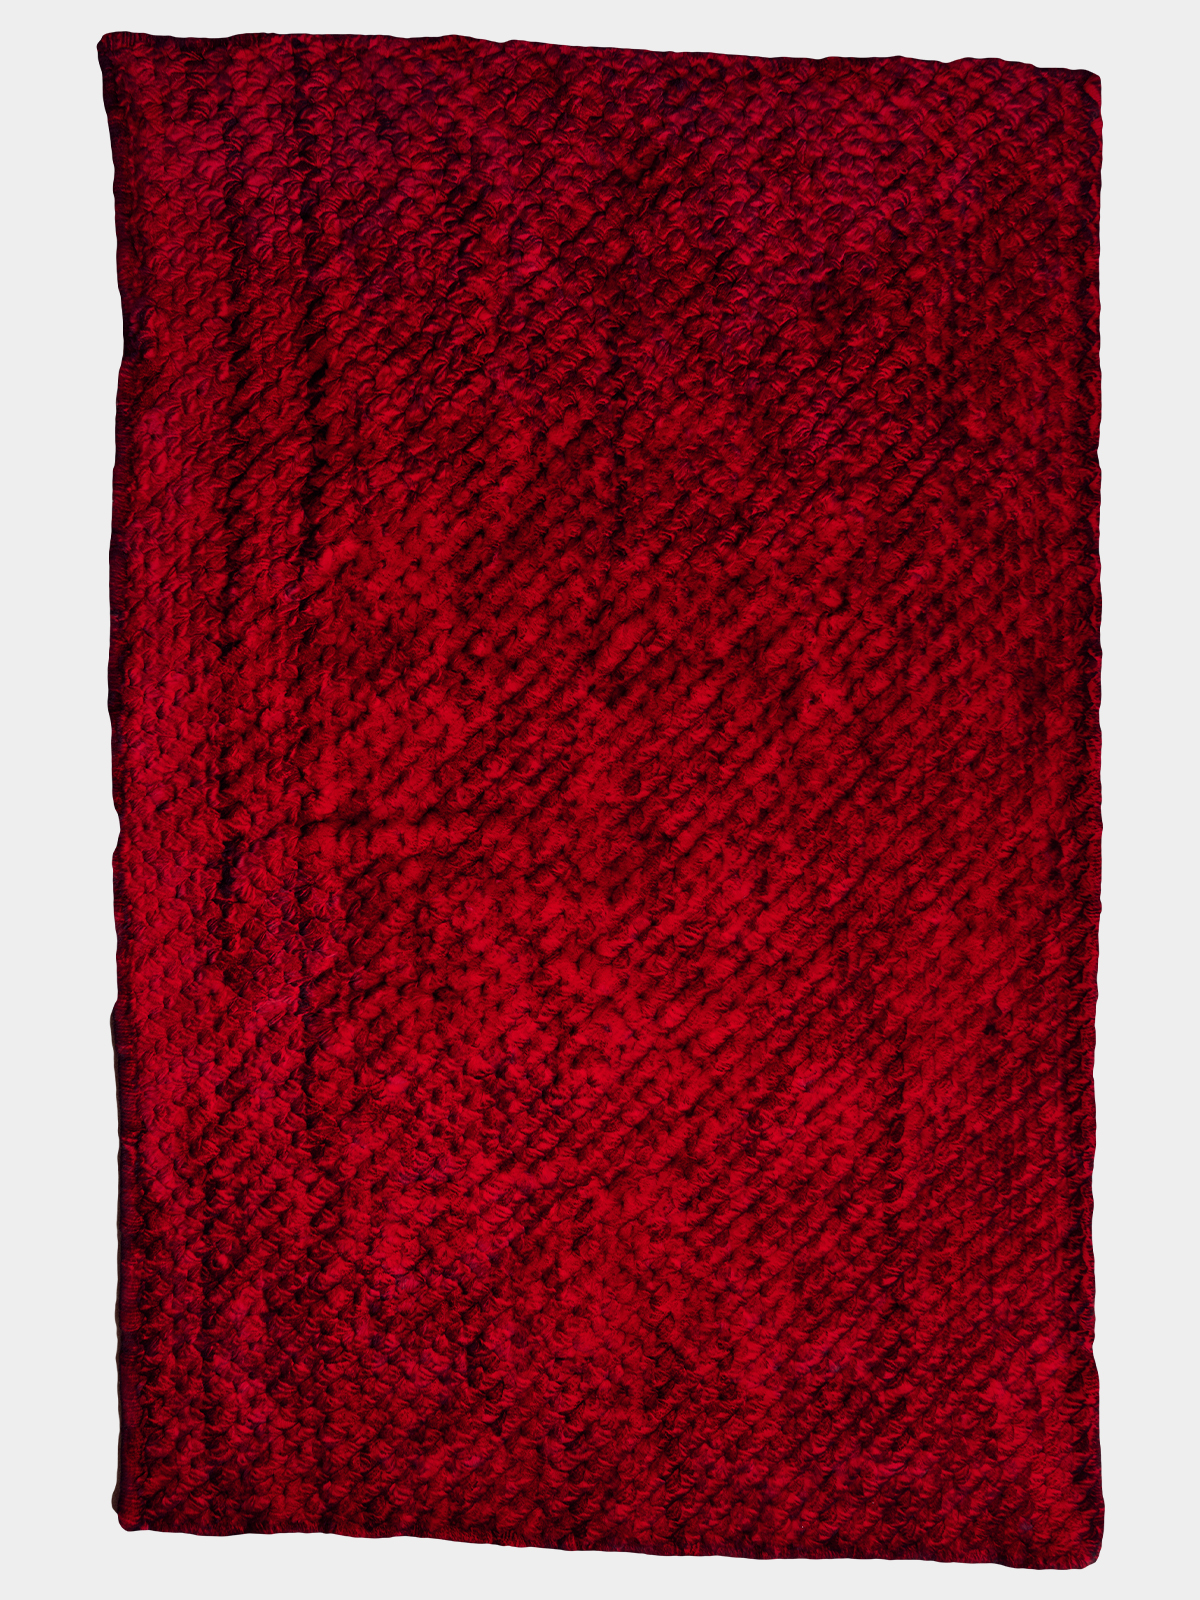 Red Knitted Rex Rabbit Fur Blanket